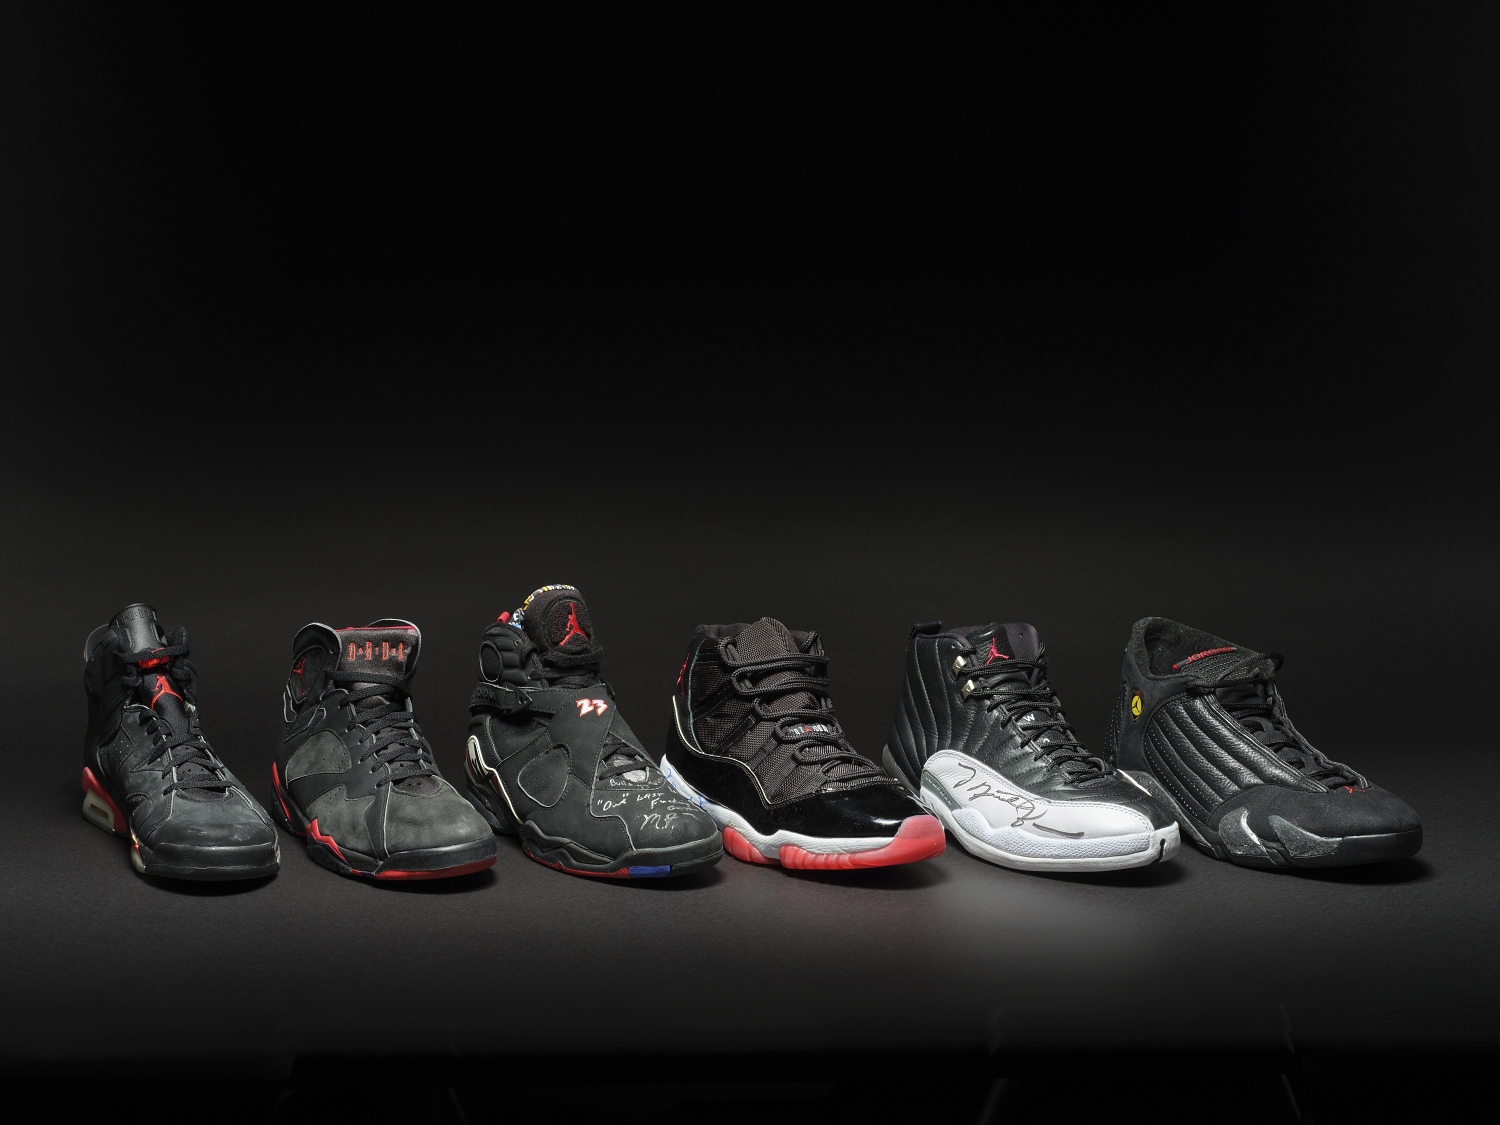 Michael Jordan championship sneakers net record $8 million at auction